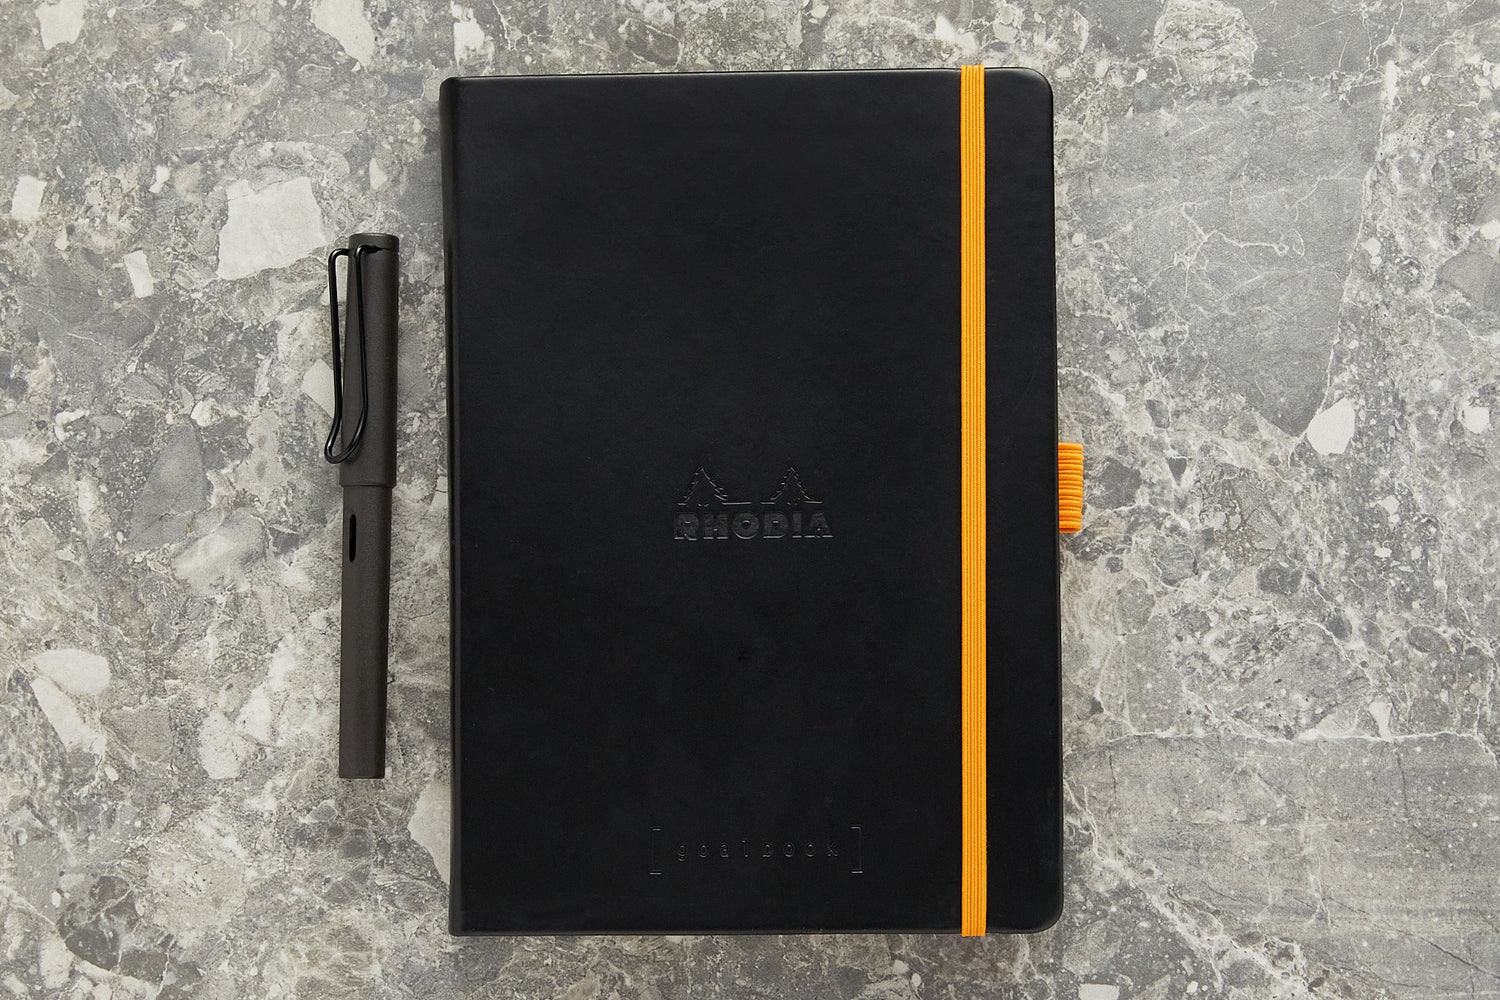 Rhodia Dot Grid Goalbook A5- Hardcover Turquoise